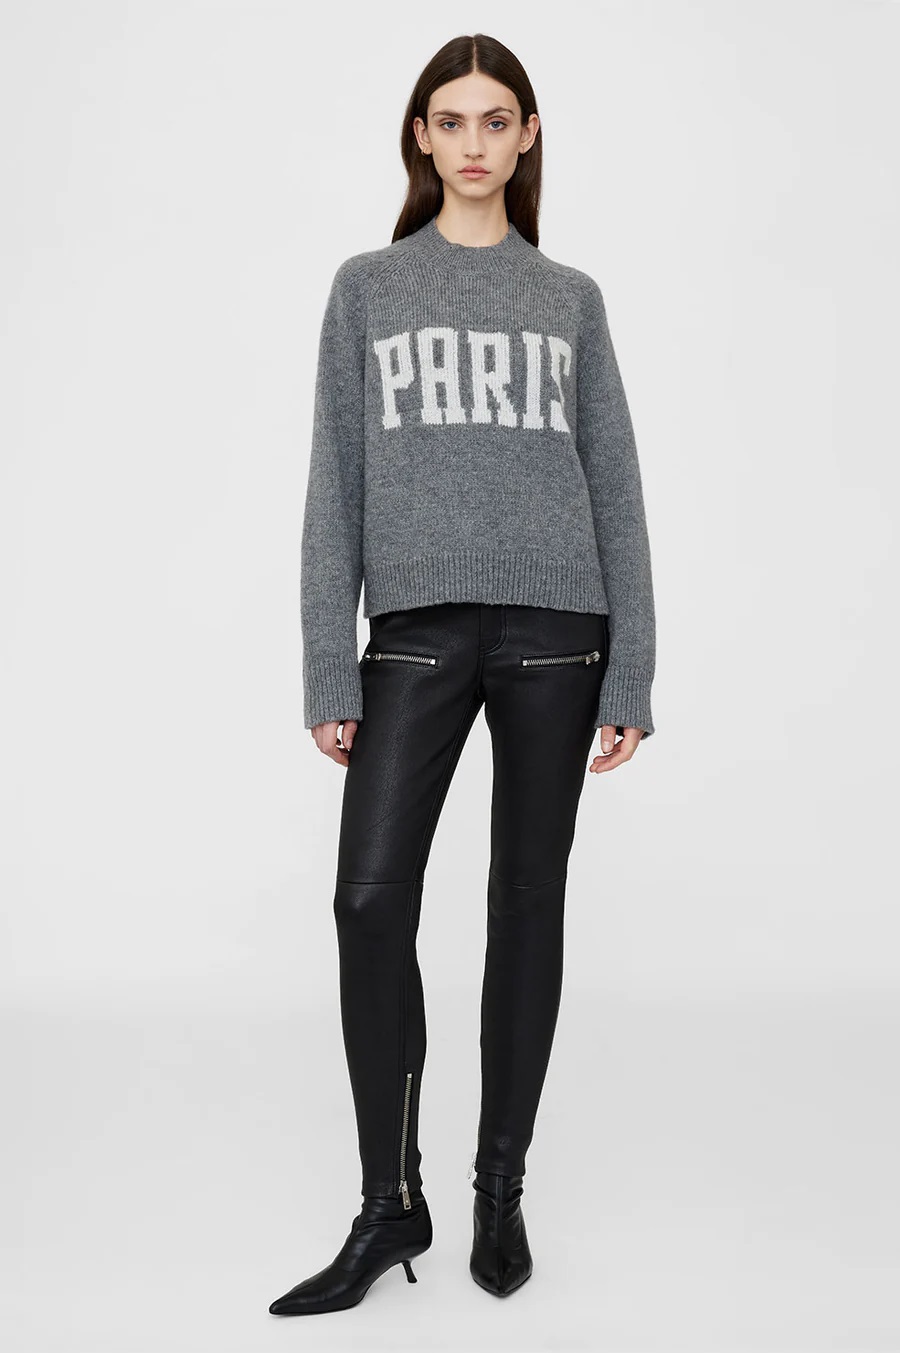 ANINE BING Kendrick Knit Sweater Paris in Charcoal M